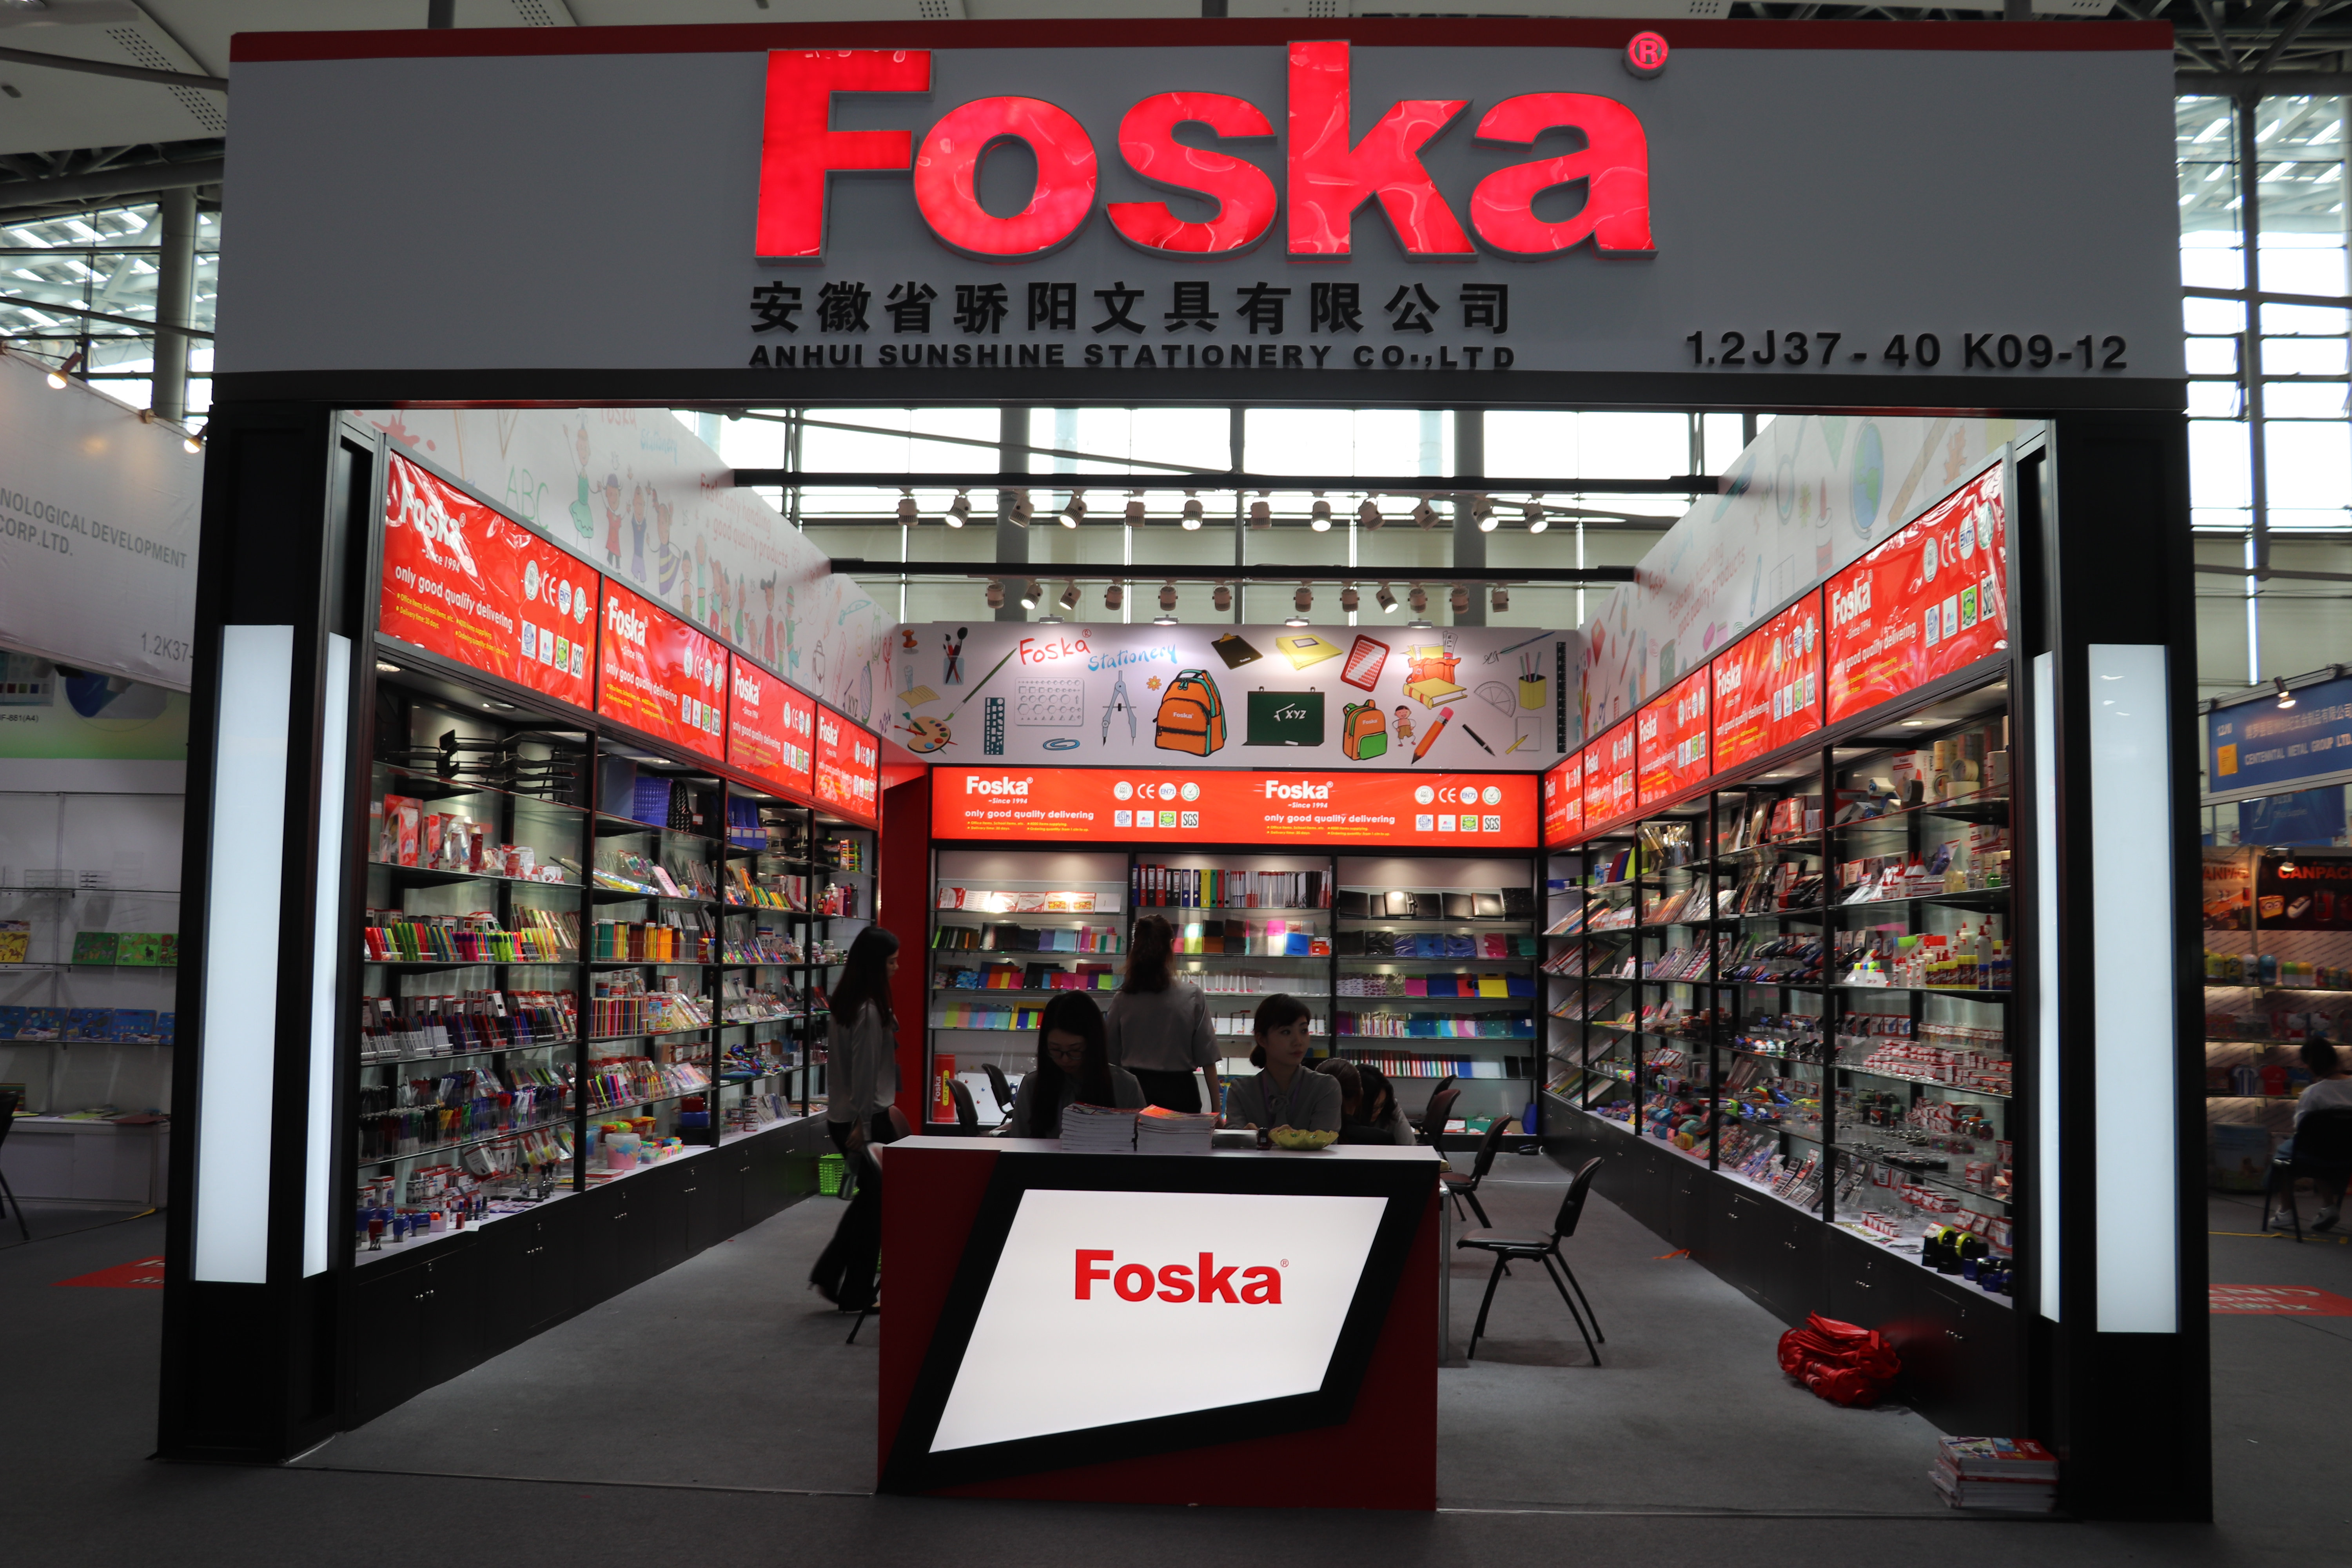 Foska will attend 133th Canton Fair